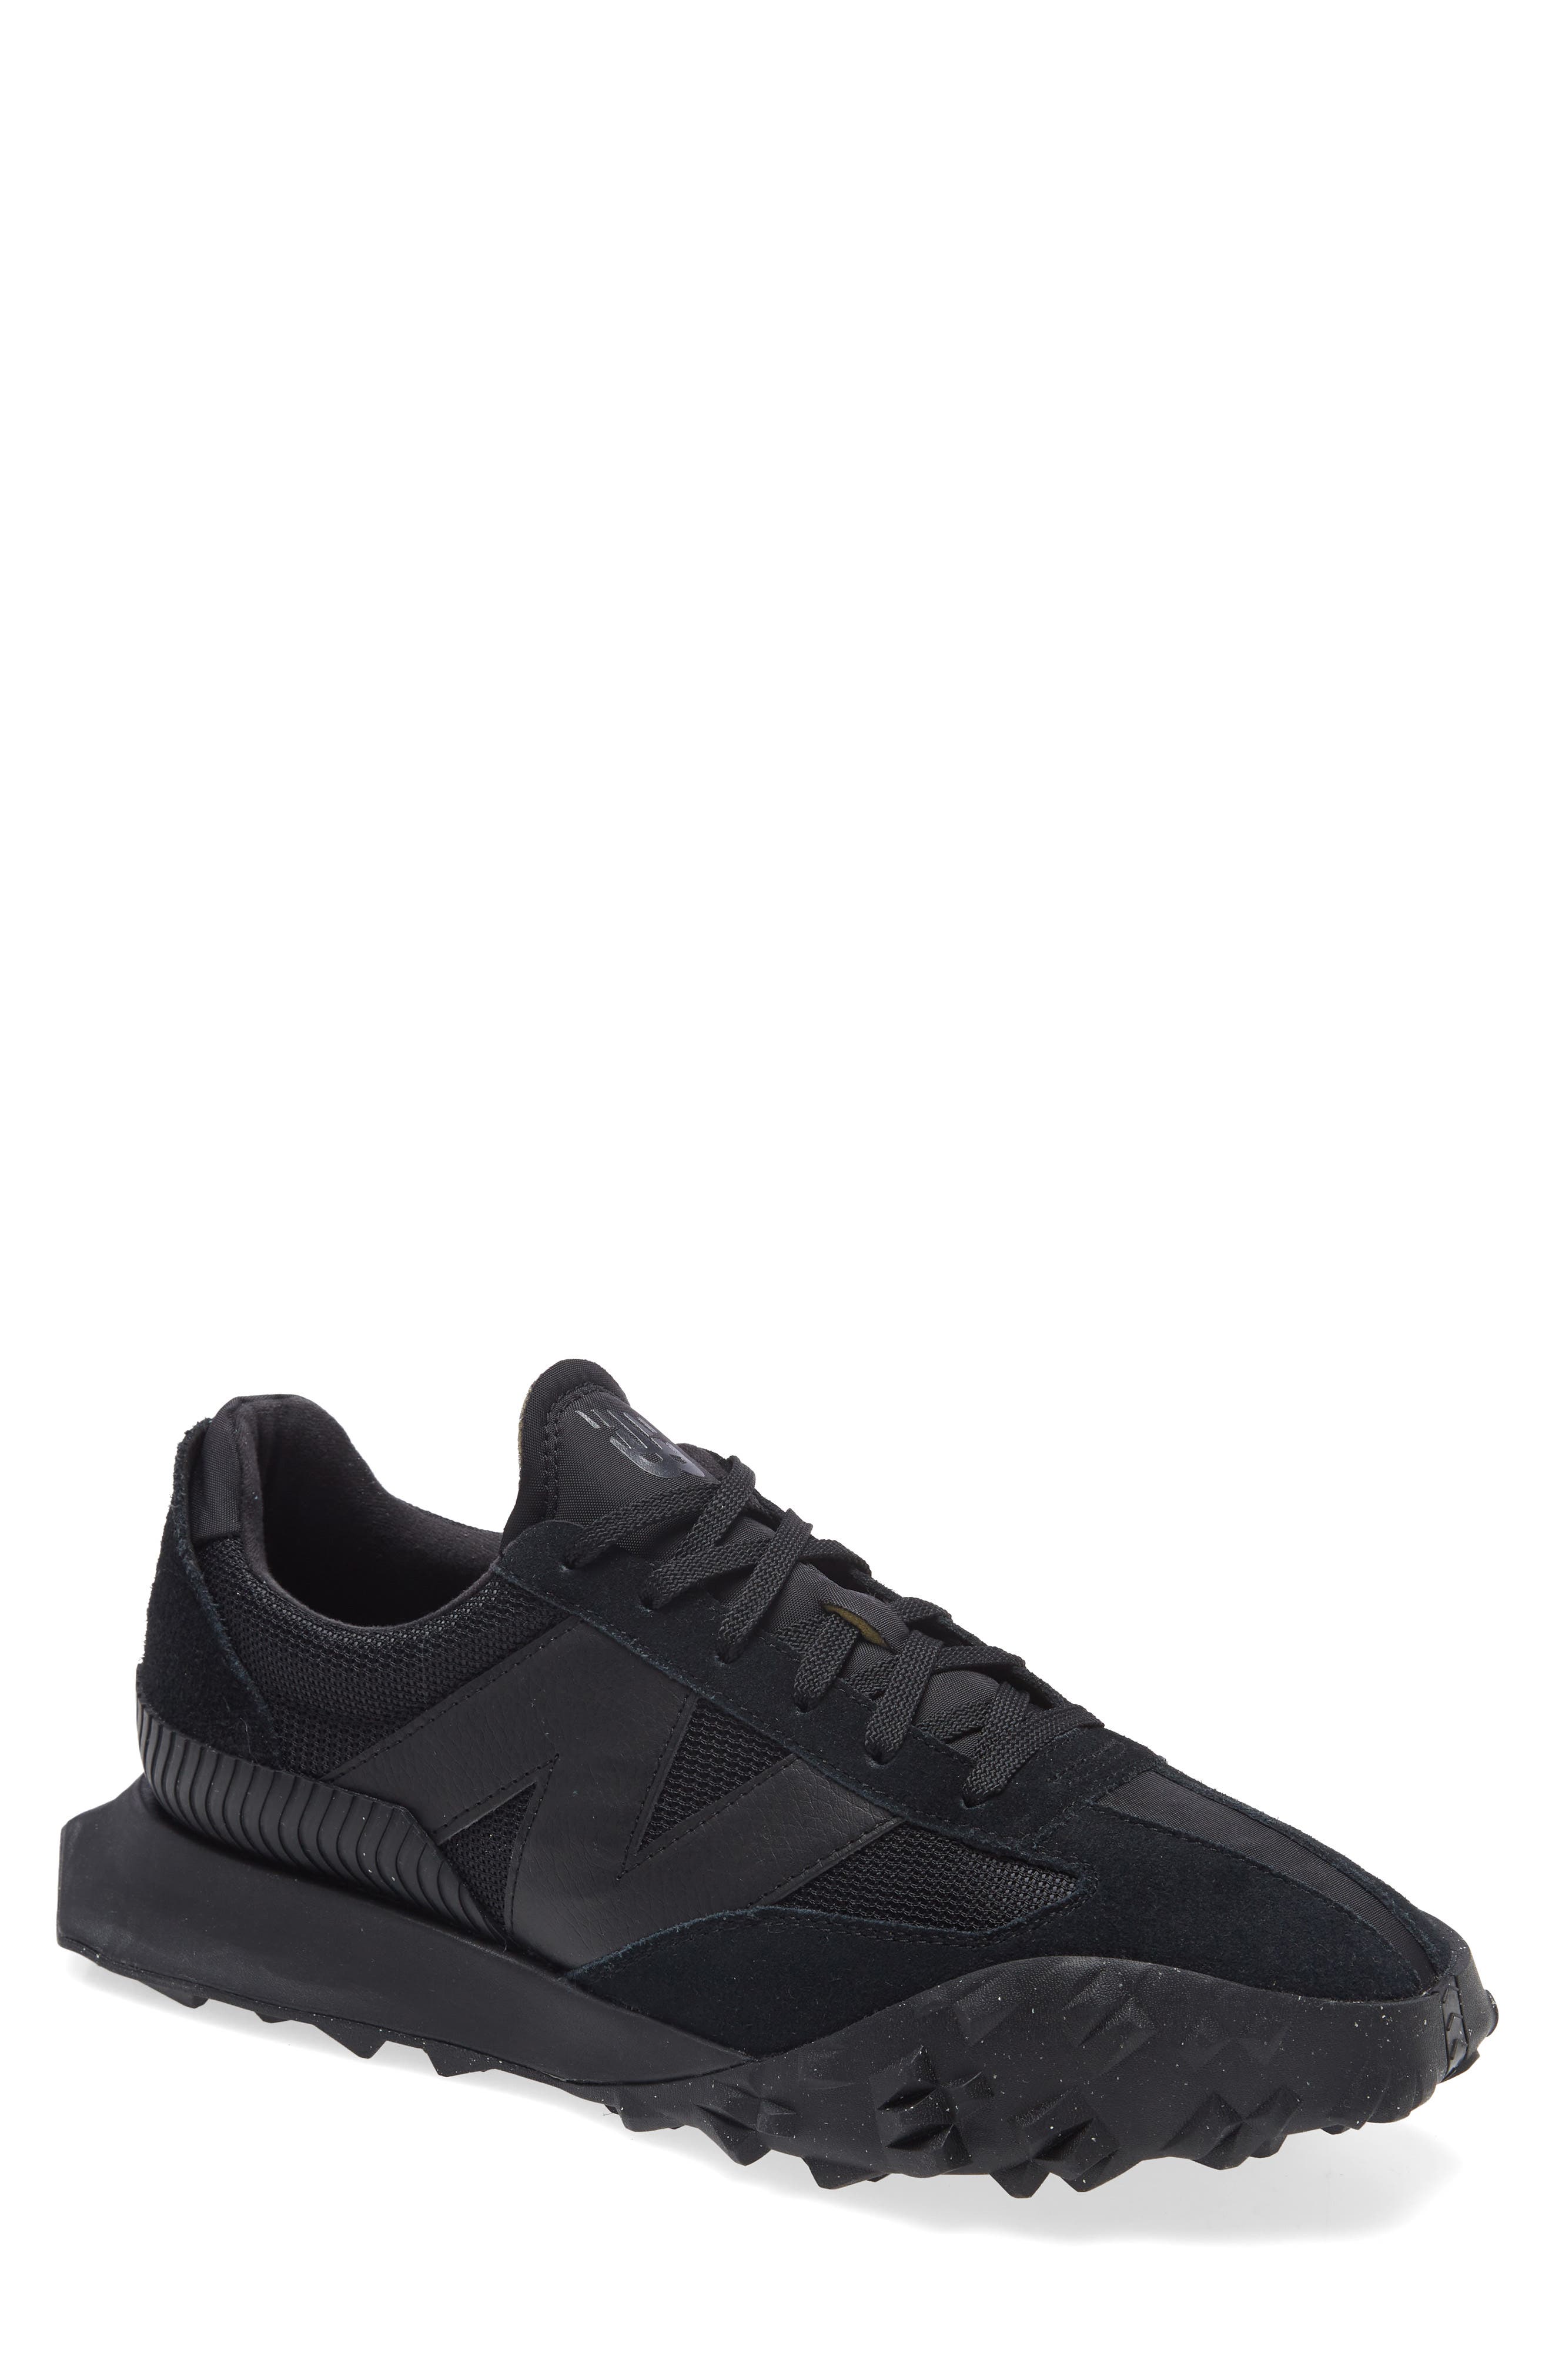 New Balance XC72 Sneaker in Black/Black